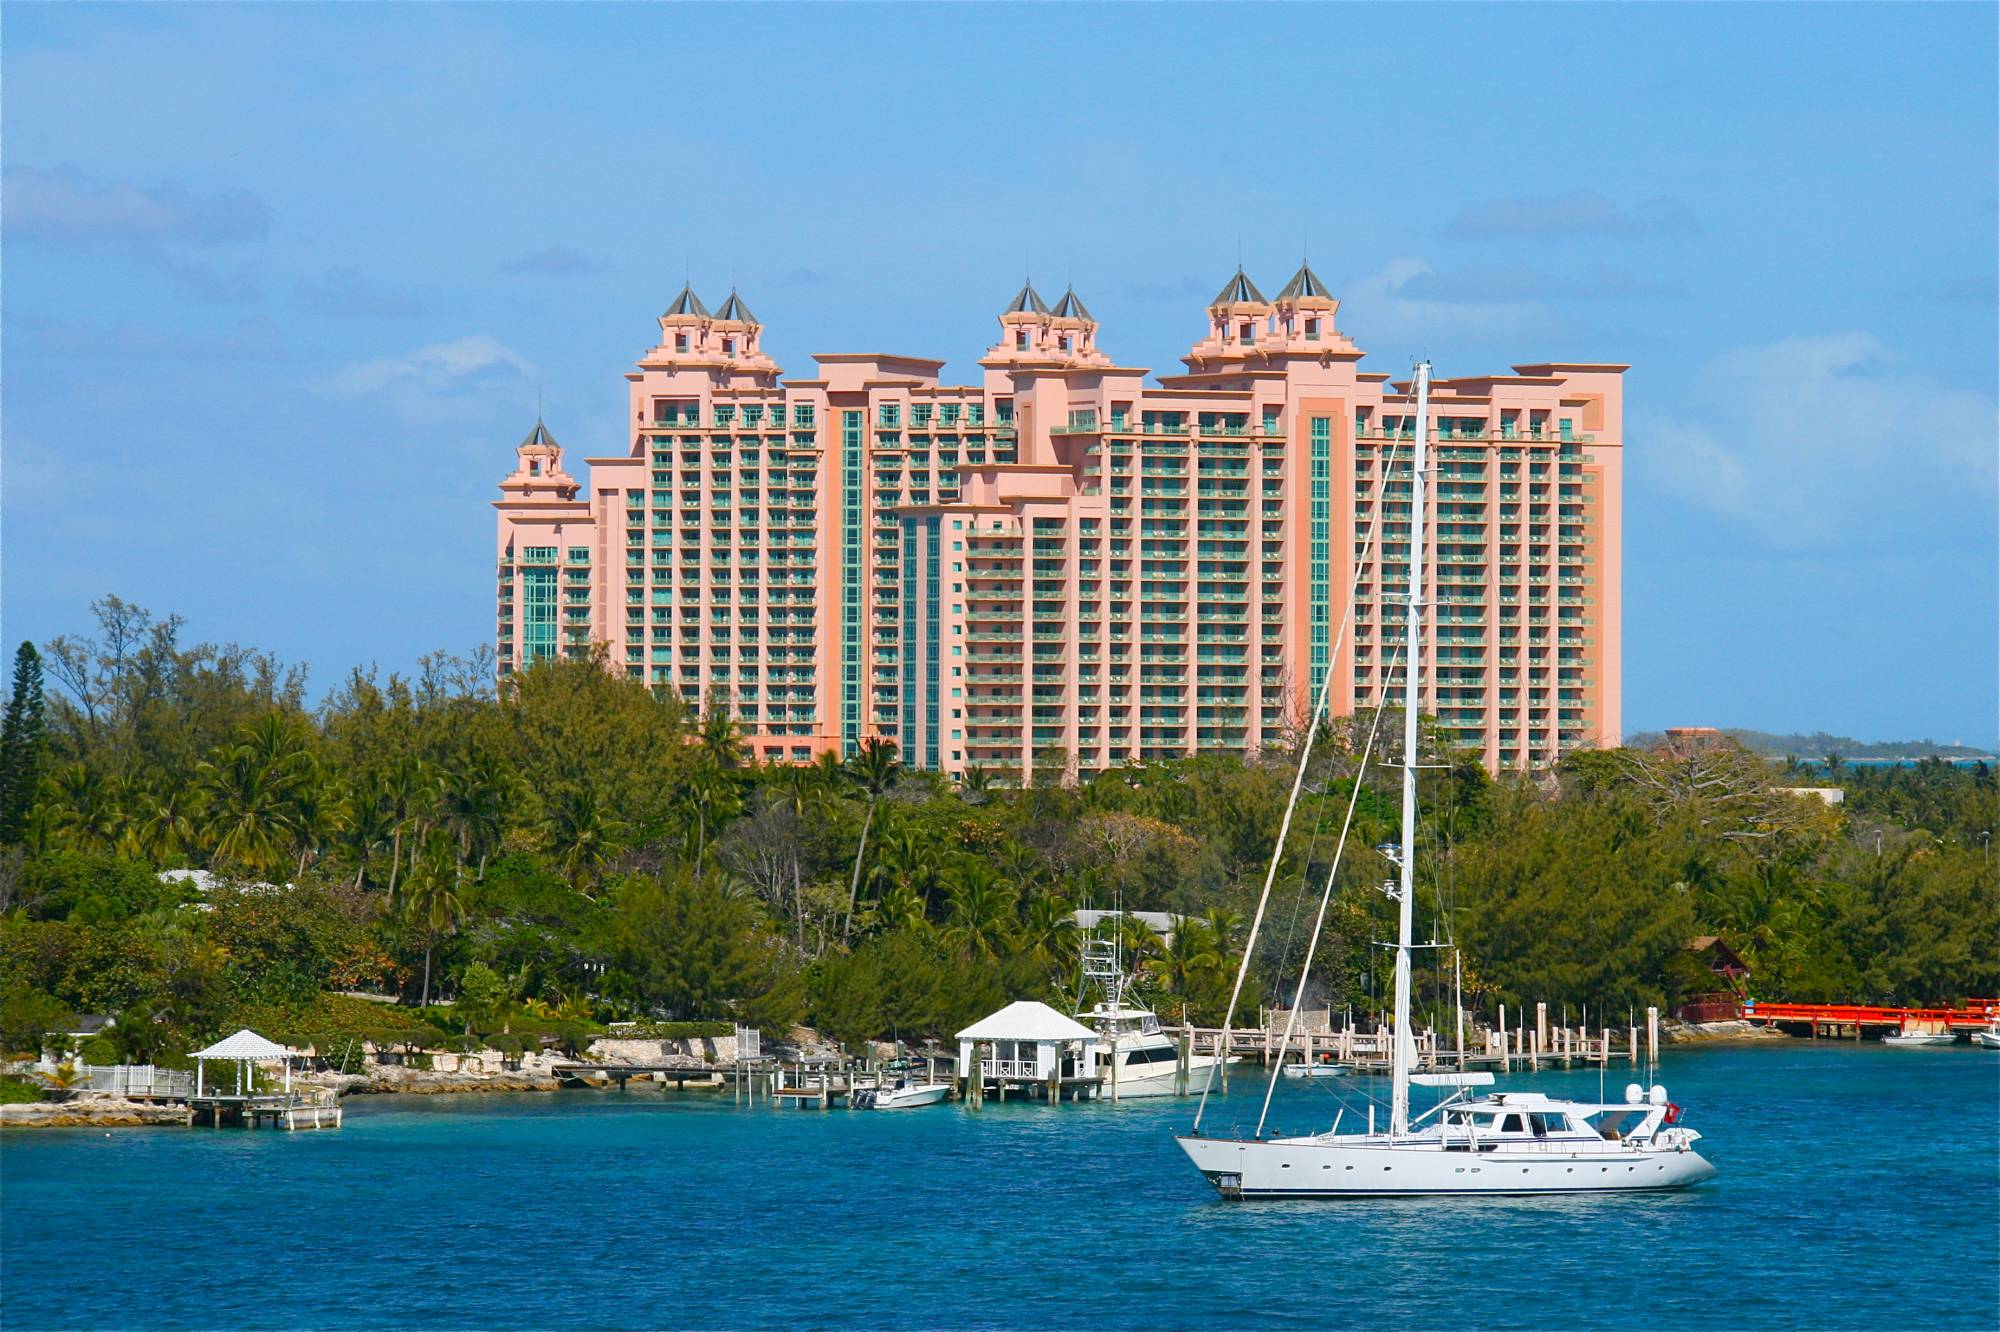 The Atlantis Resort as seen from the Disney Wonder